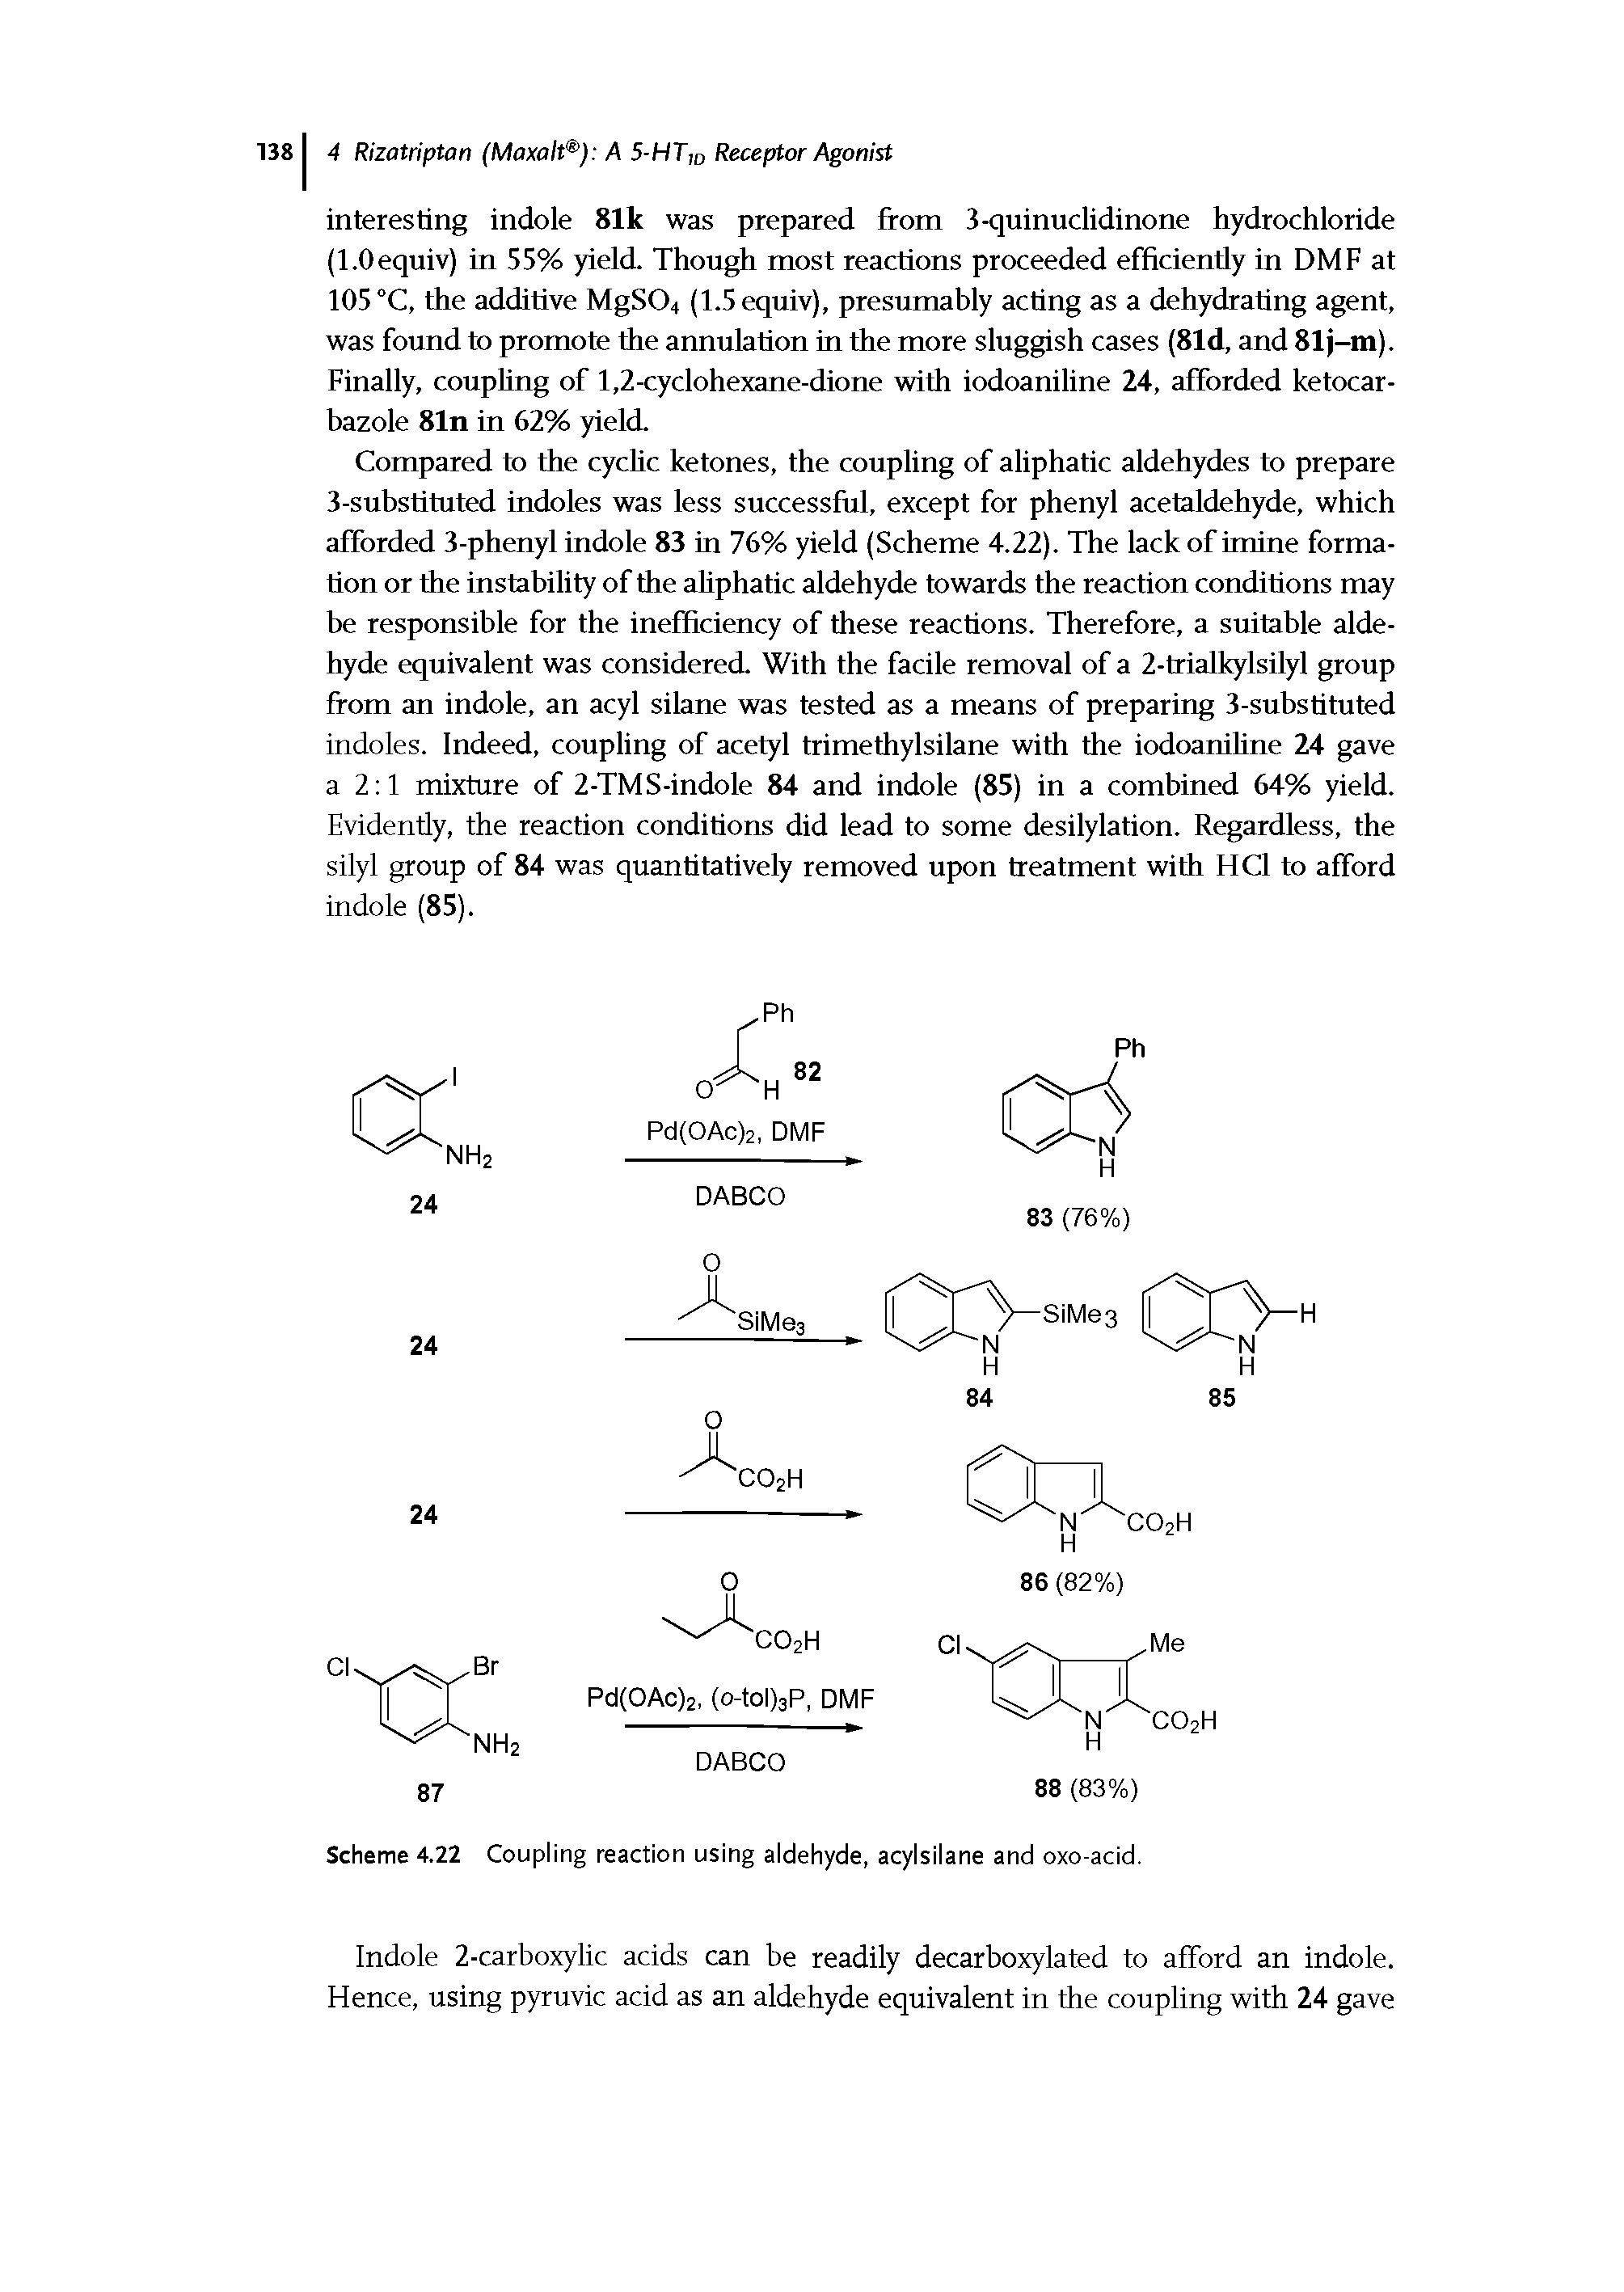 Scheme 4.22 Coupling reaction using aldehyde, acylsilane and oxo-acid.